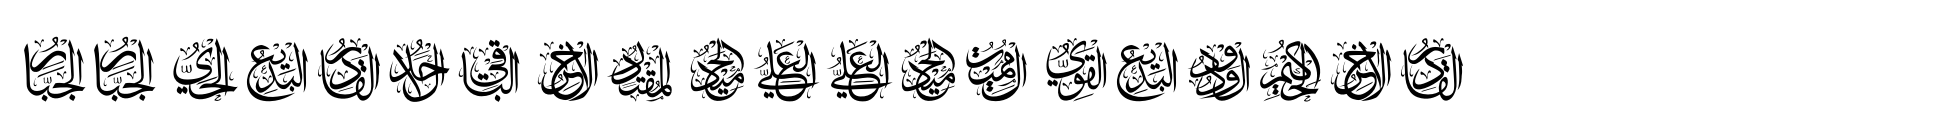 99 Names of ALLAH Random